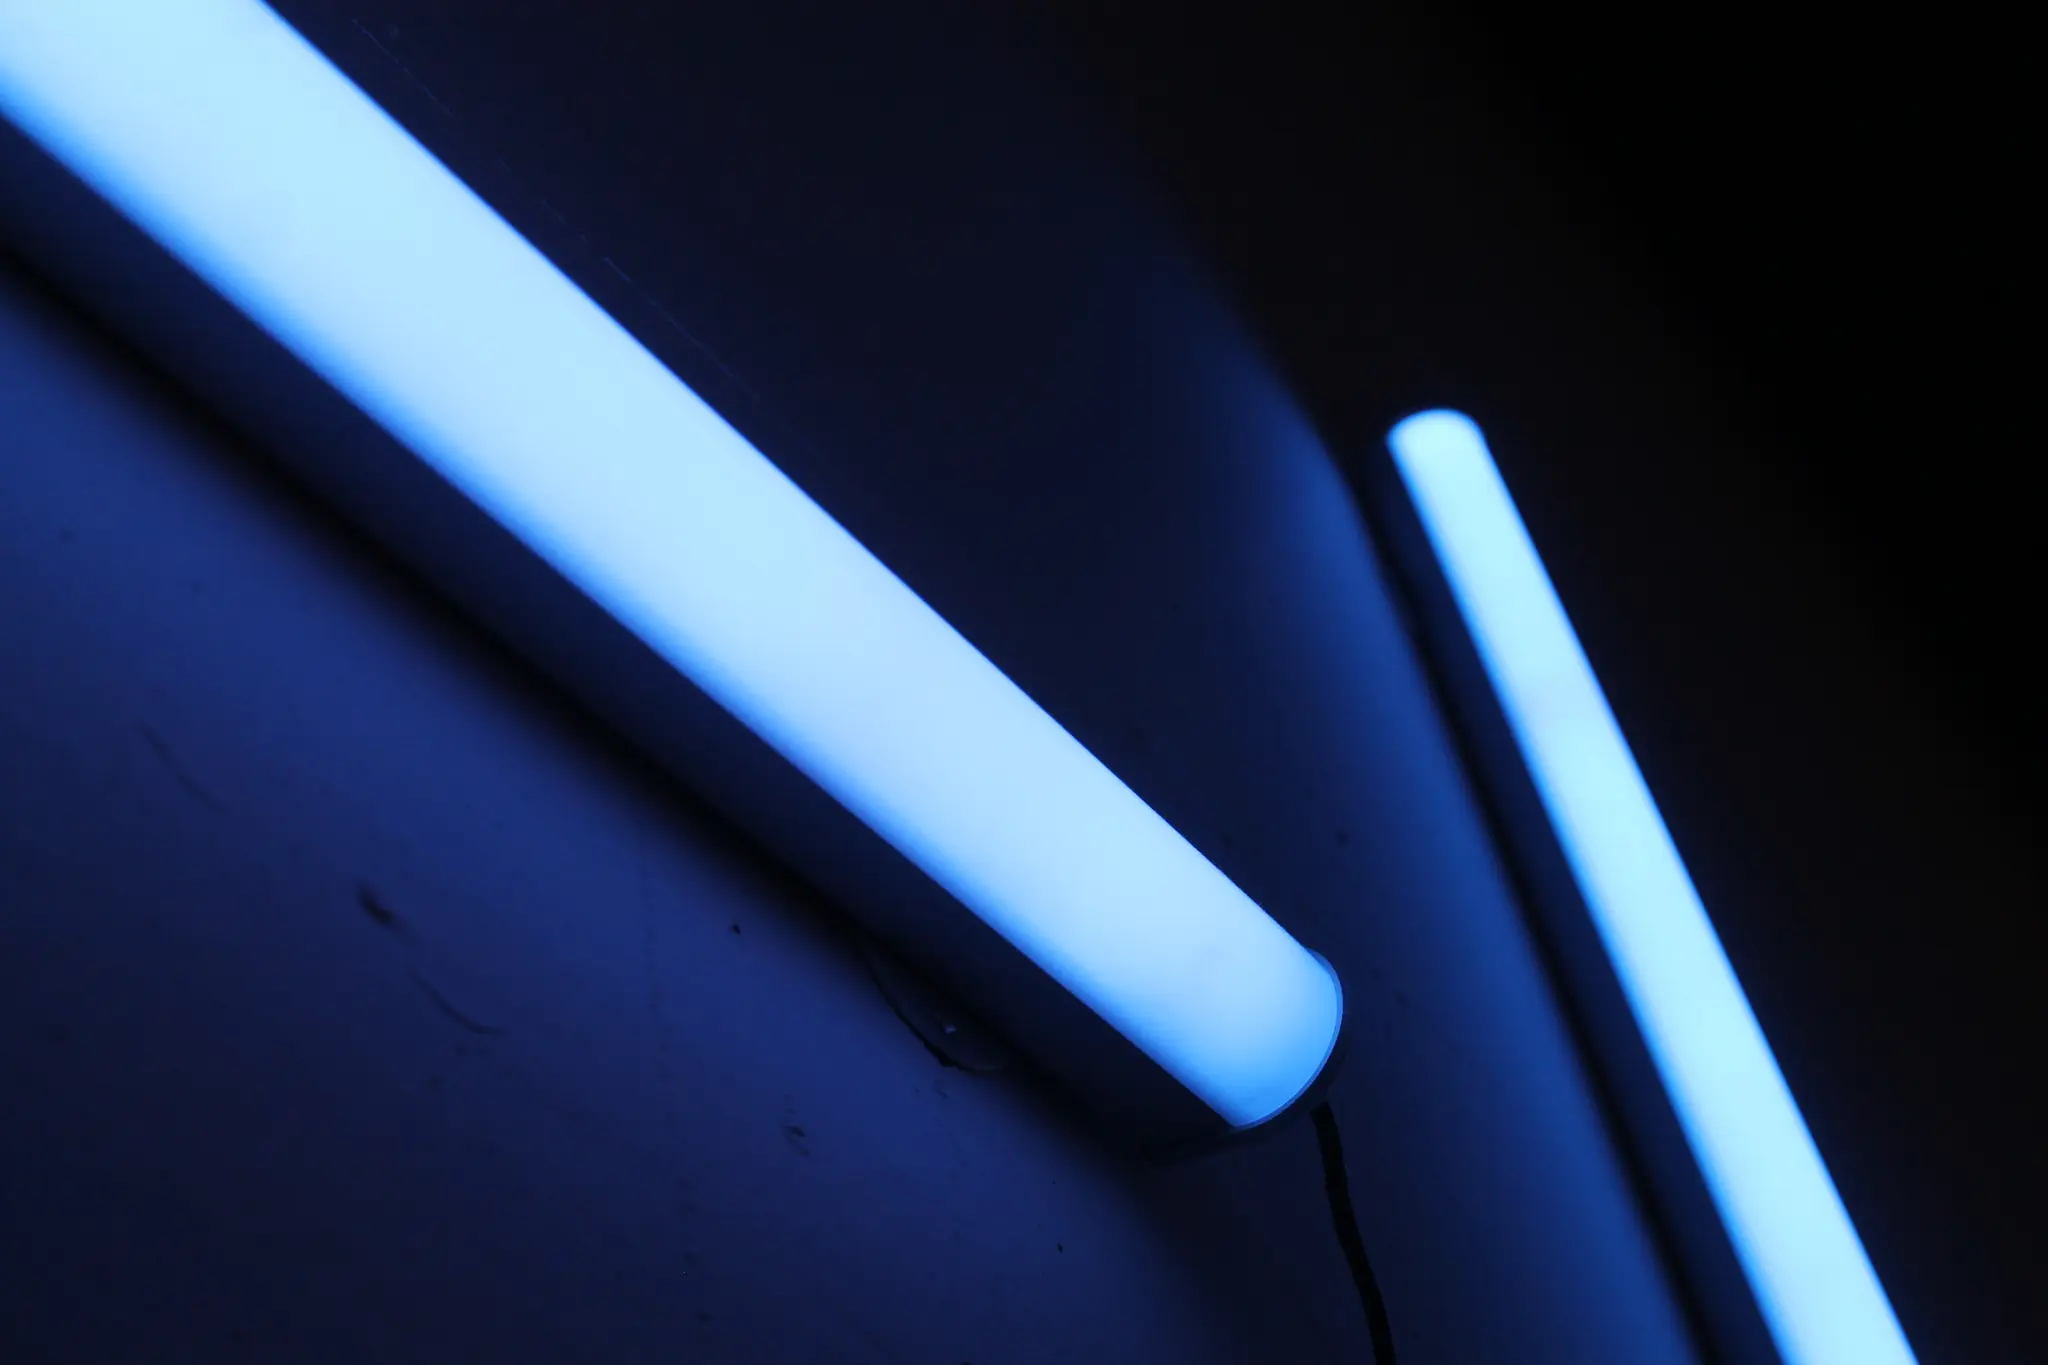 LED Linear Light fixture using LED Modules